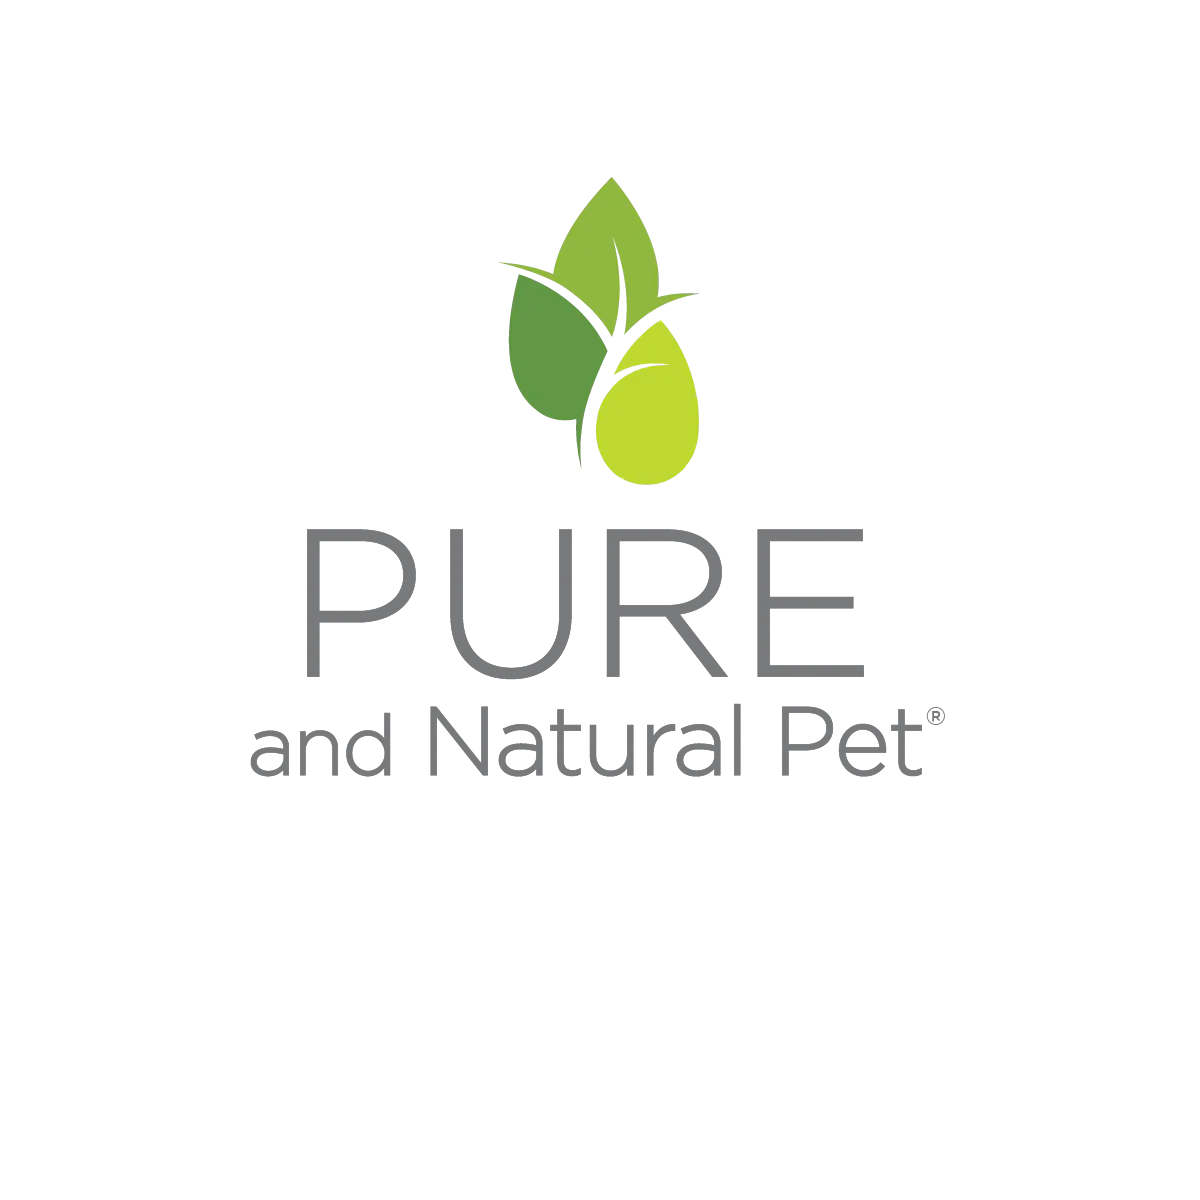 Pure and Natural Pet